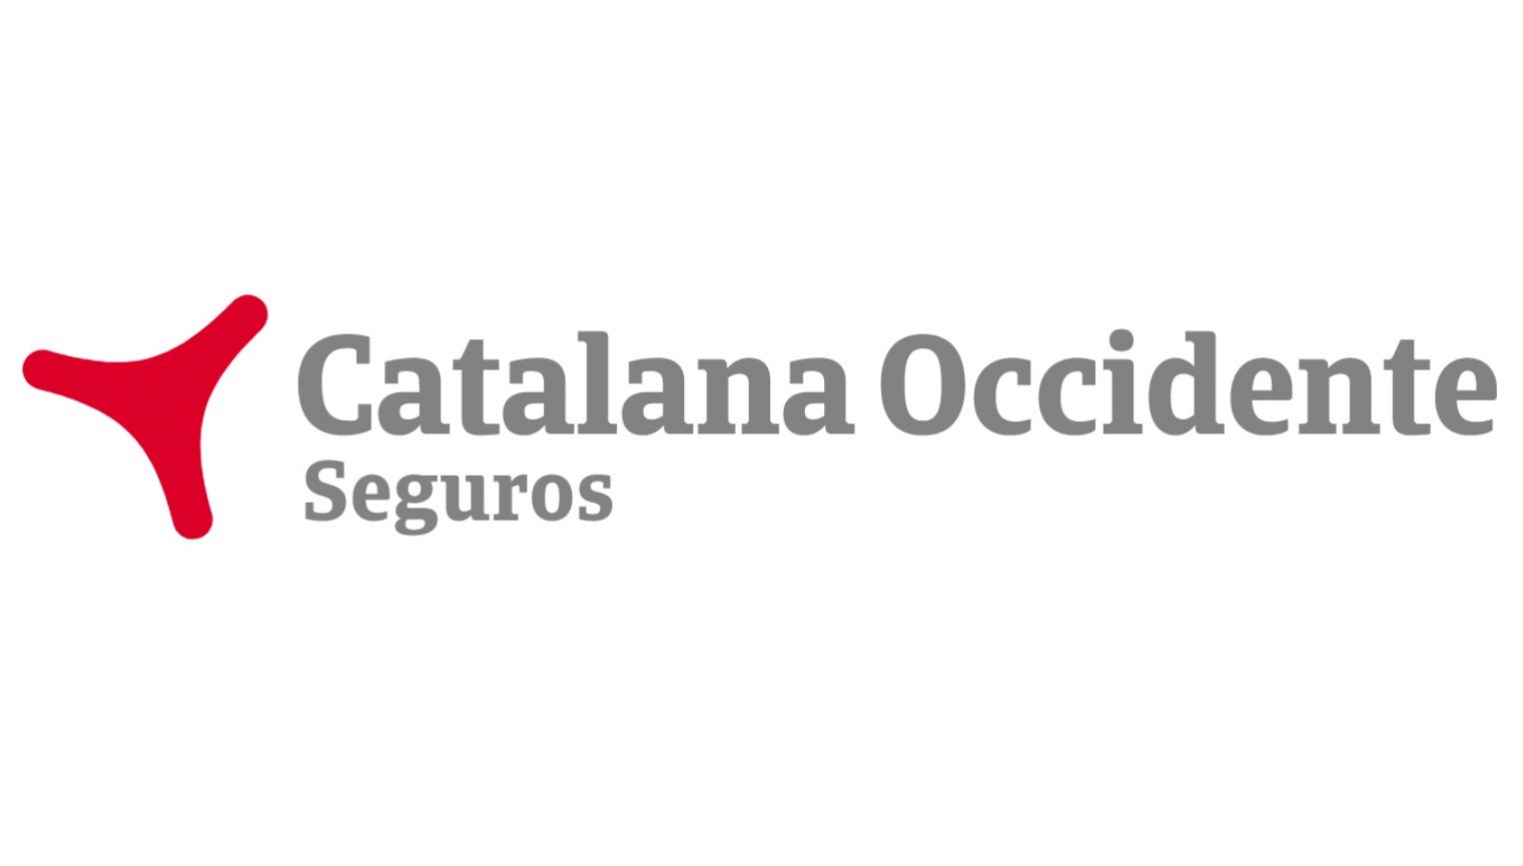 Marcos Ortega Agente Exclusivo Catalana Occidente - foto 1/1